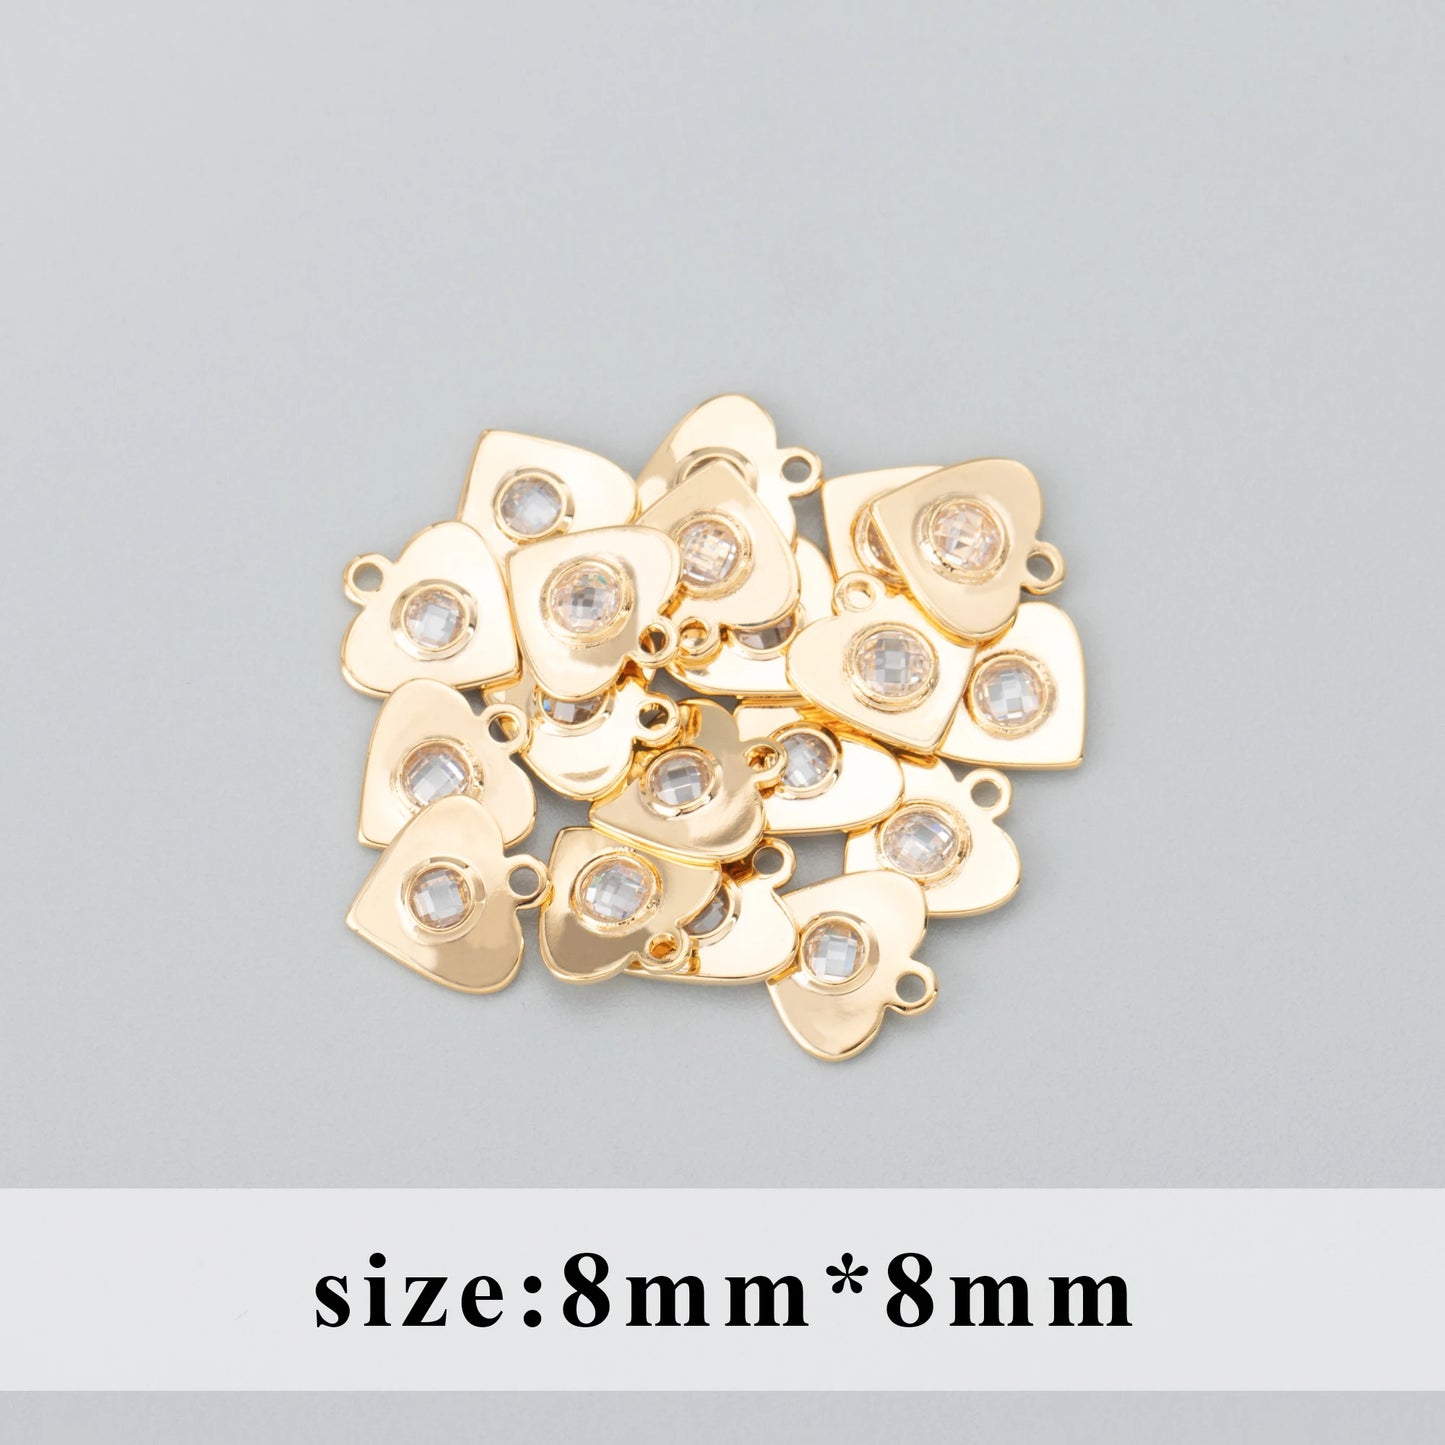 GUFEATHER M803,jewelry accessories,pass REACH,nickel free,18k gold rhodium plated,diy zircon pendants,diy earrings,20pcs/lot